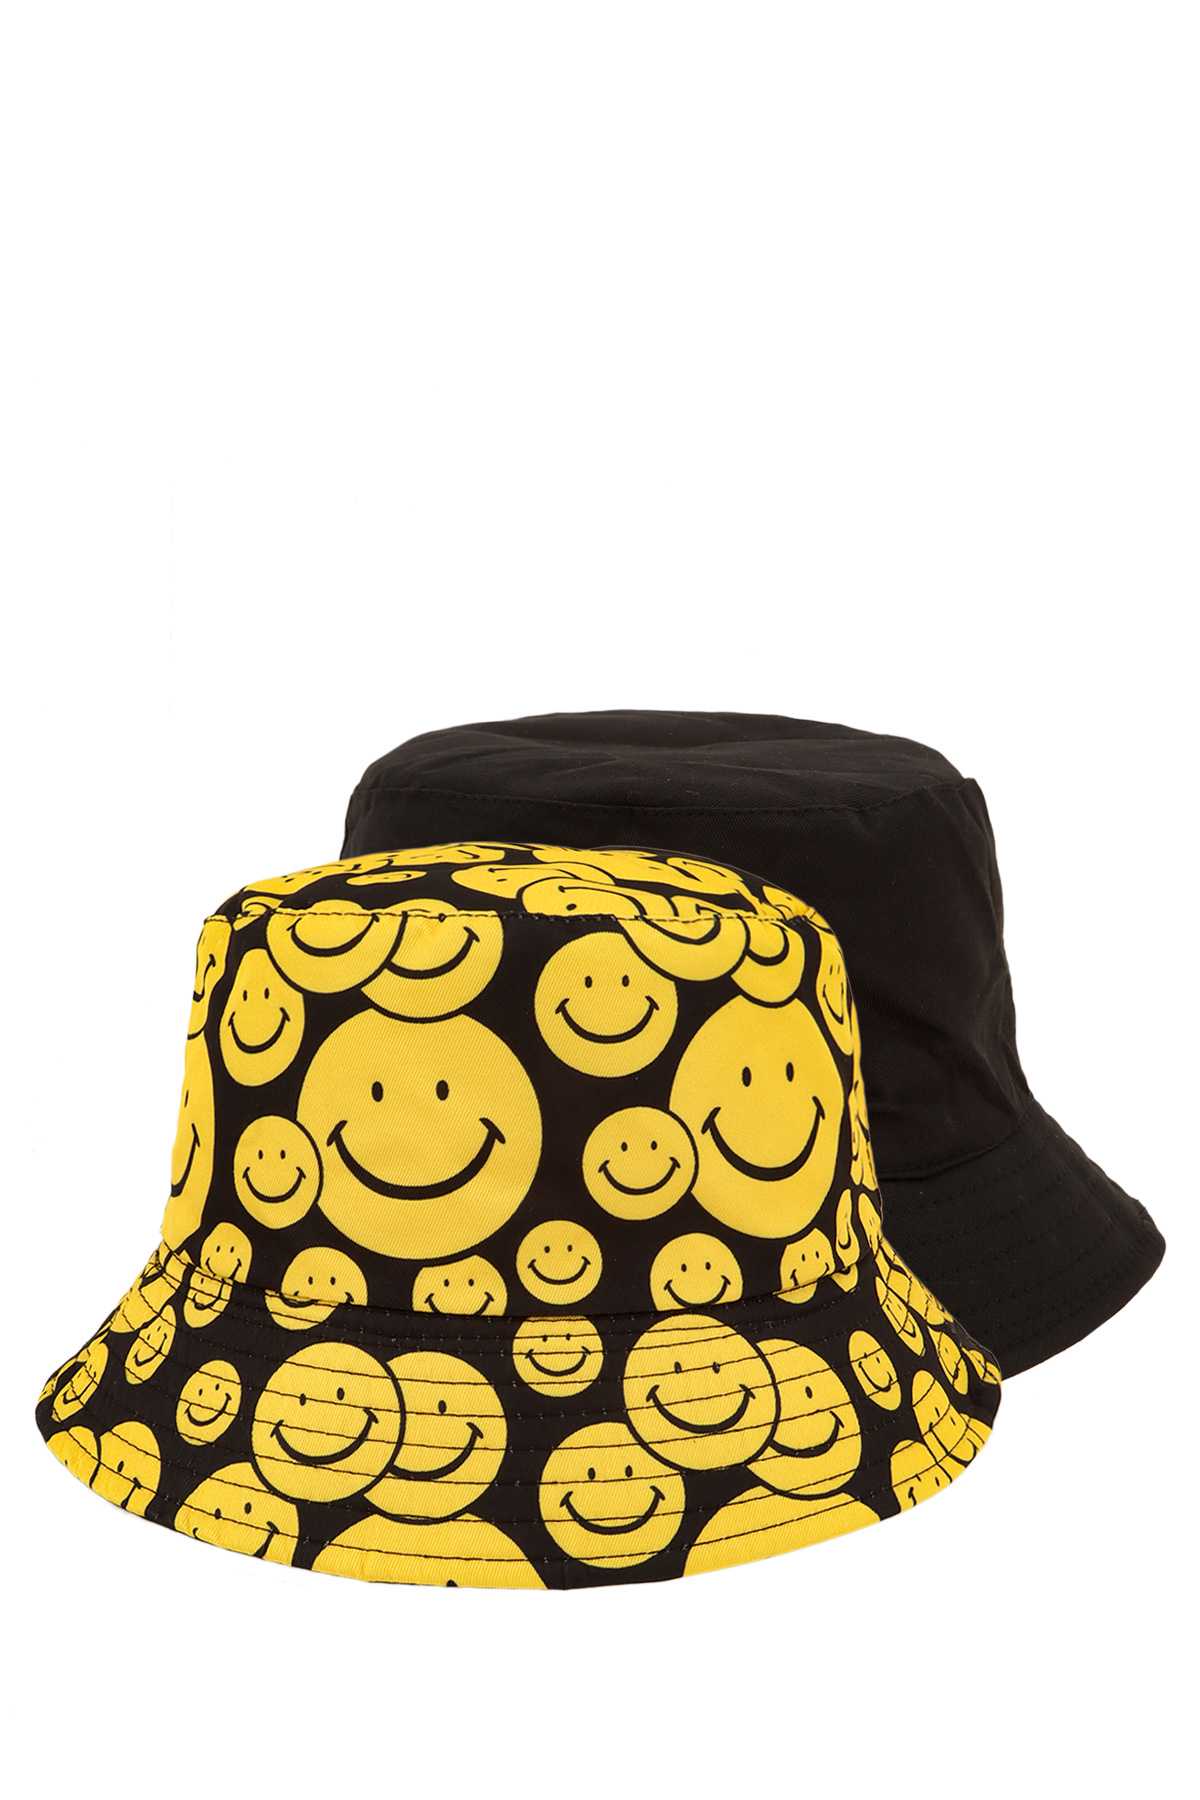 Smiley Face Reversible Bucket Hat